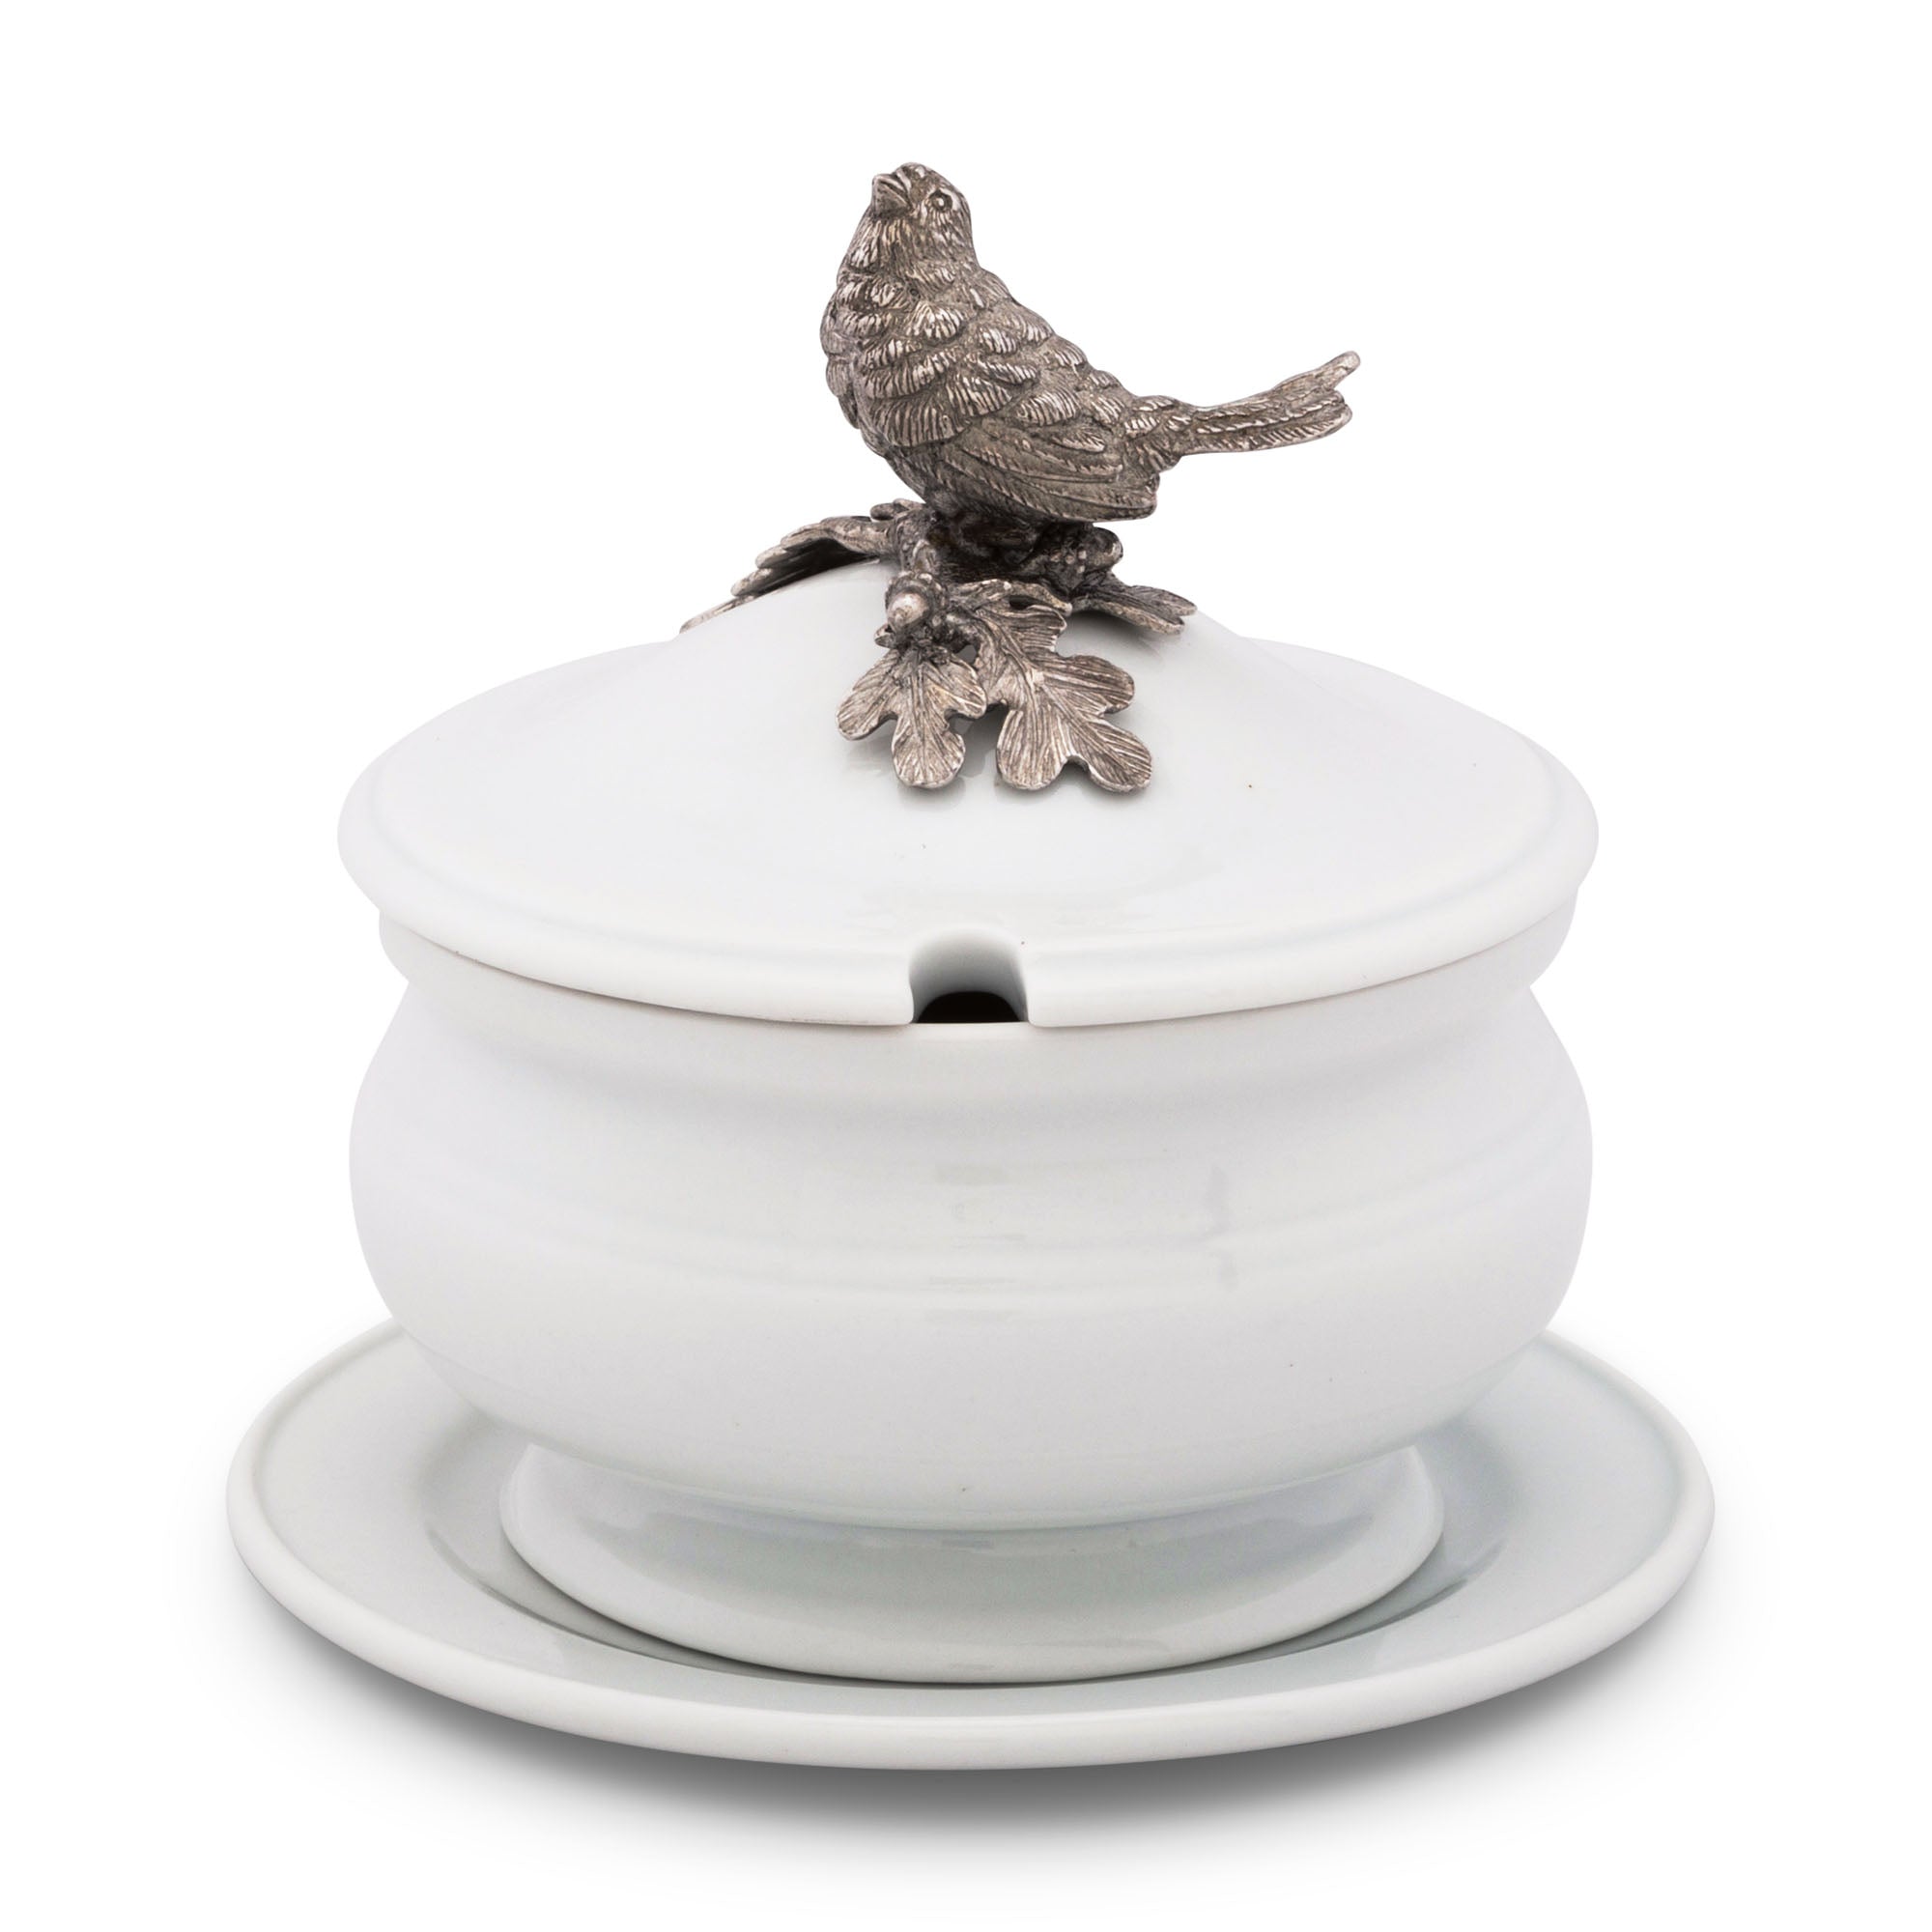 Vagabond House Songbird Porcelain Lidded Bowl Product Image